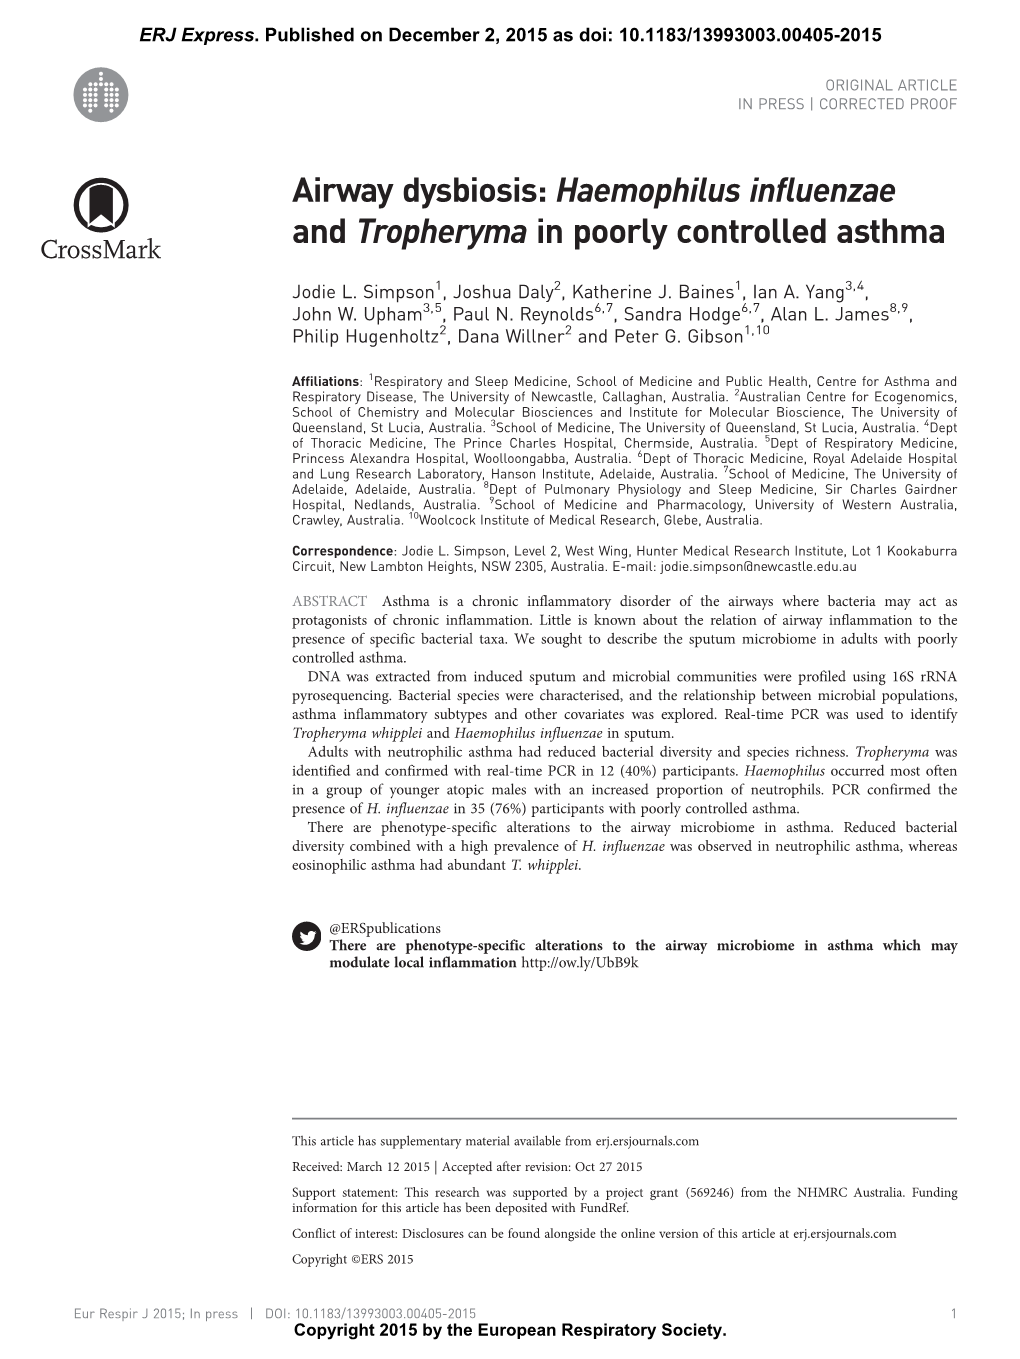 Airway Dysbiosis: Haemophilus Influenzae and Tropheryma in Poorly Controlled Asthma